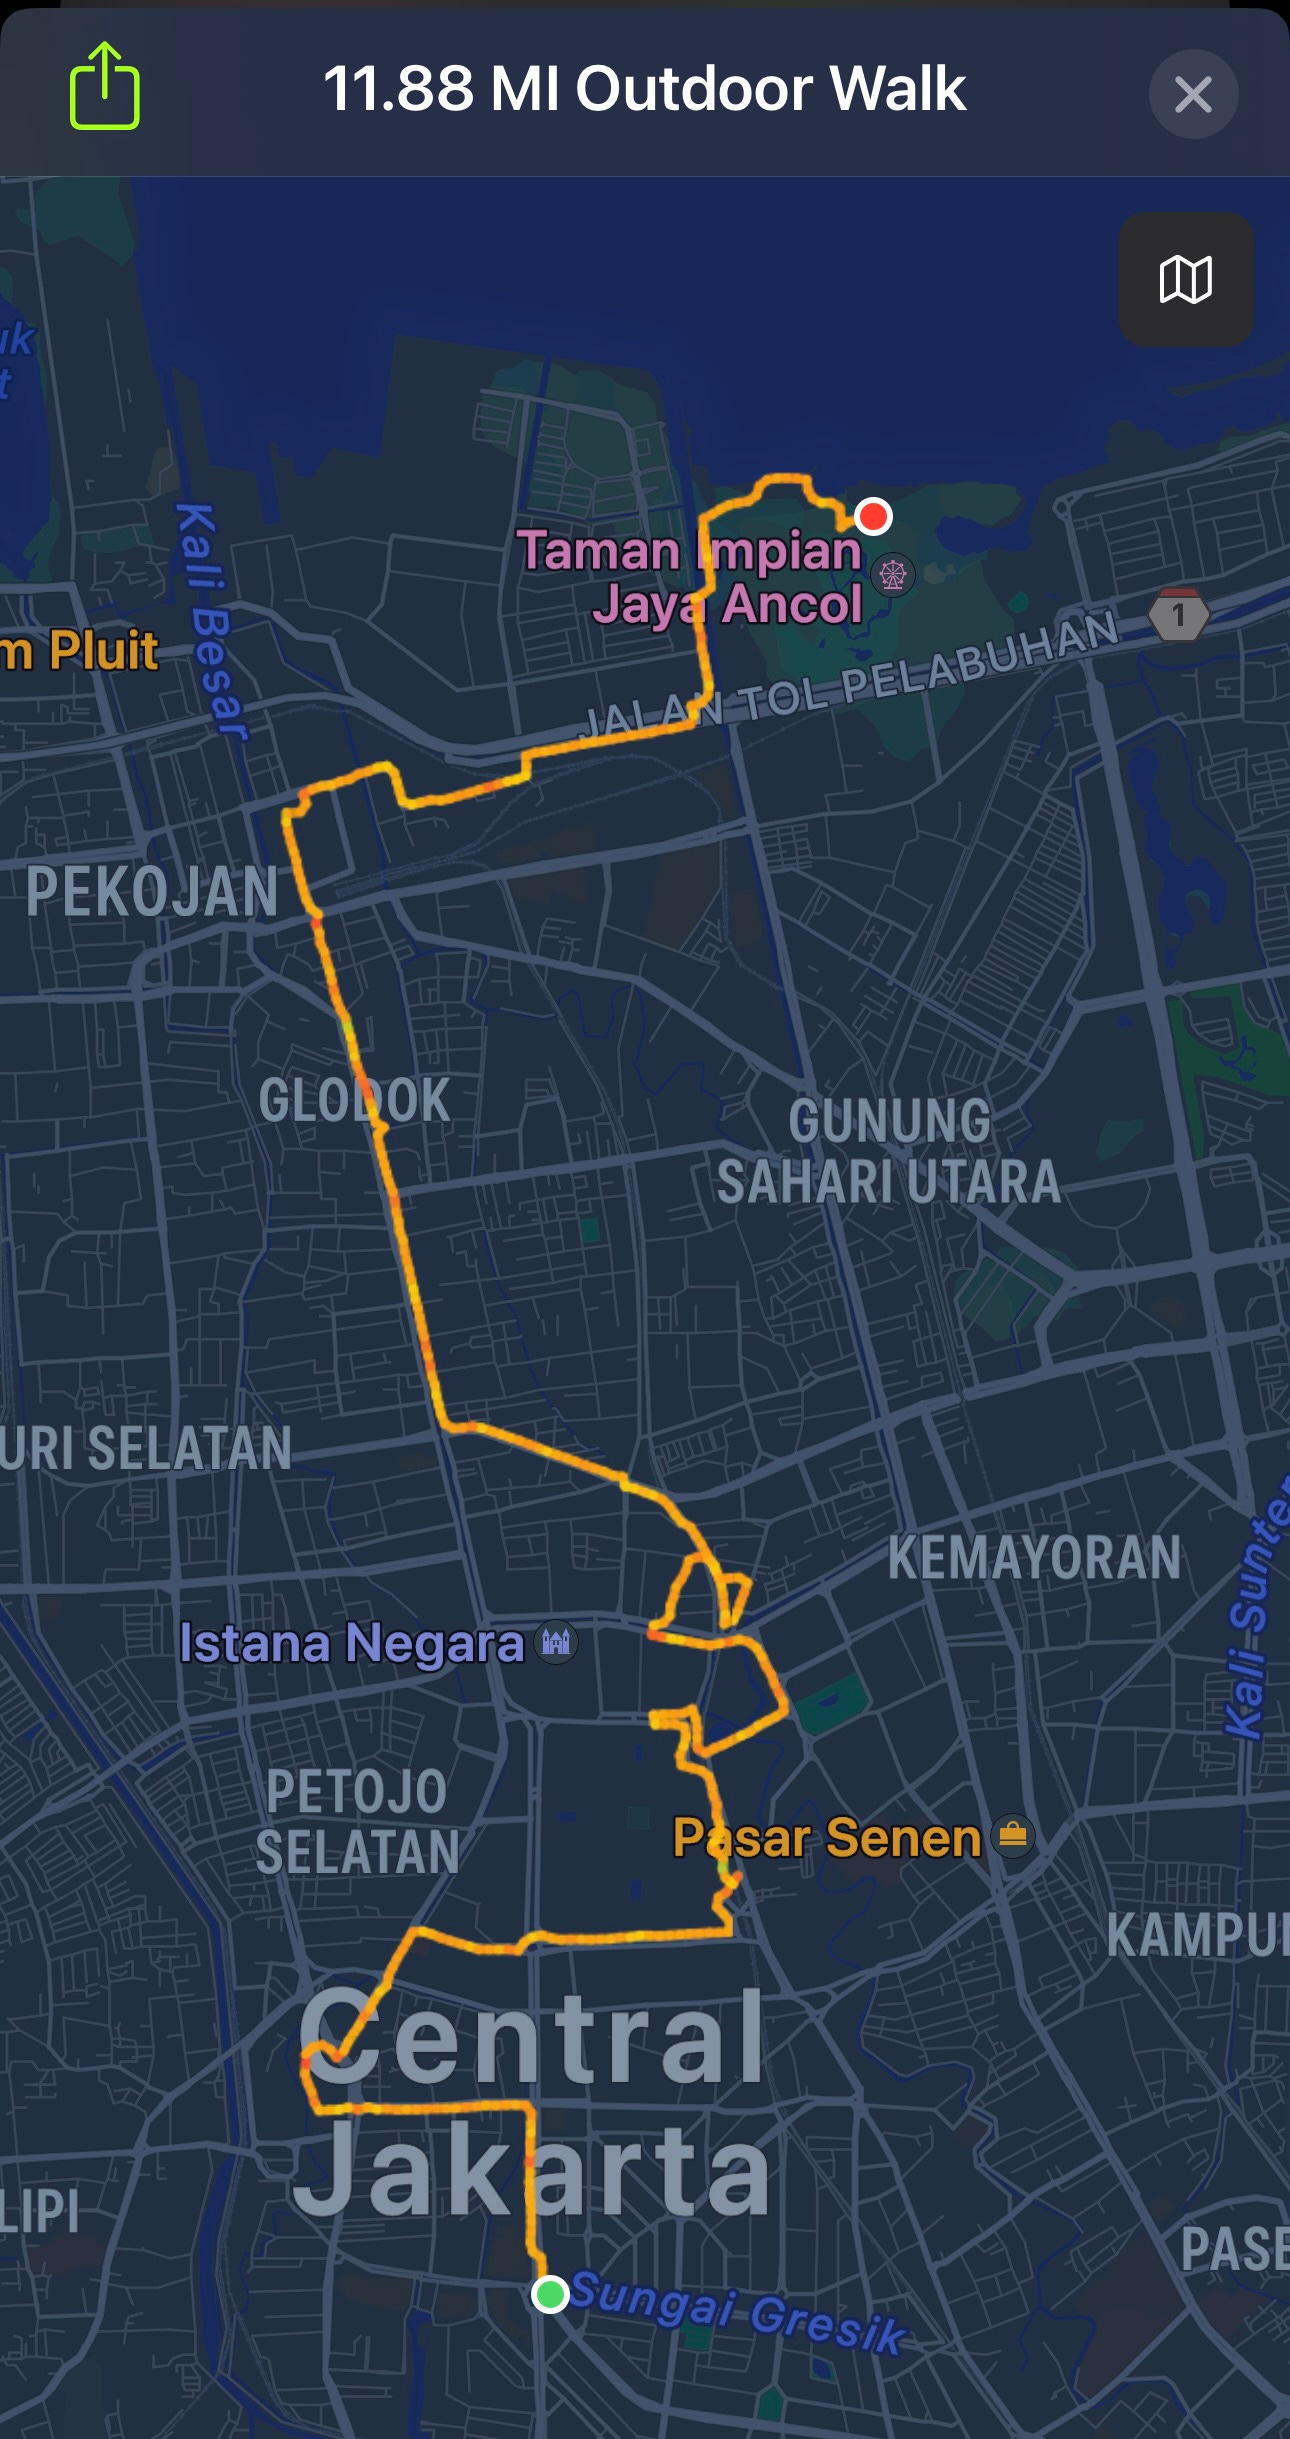 A 12-mile urban walk in Jakarta.